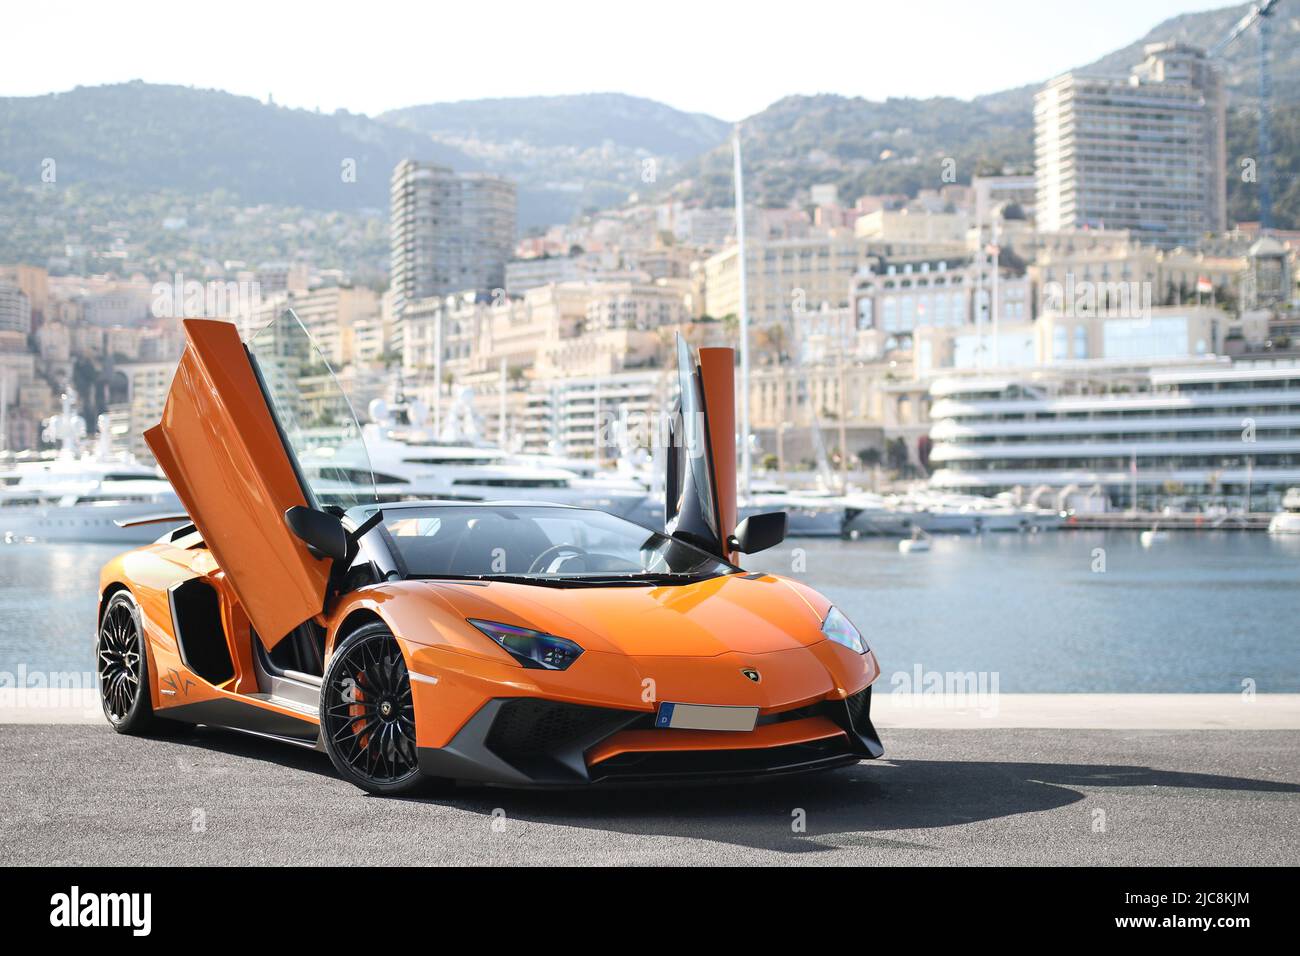 Lamborghini aventador sv hi-res stock photography and images - Alamy